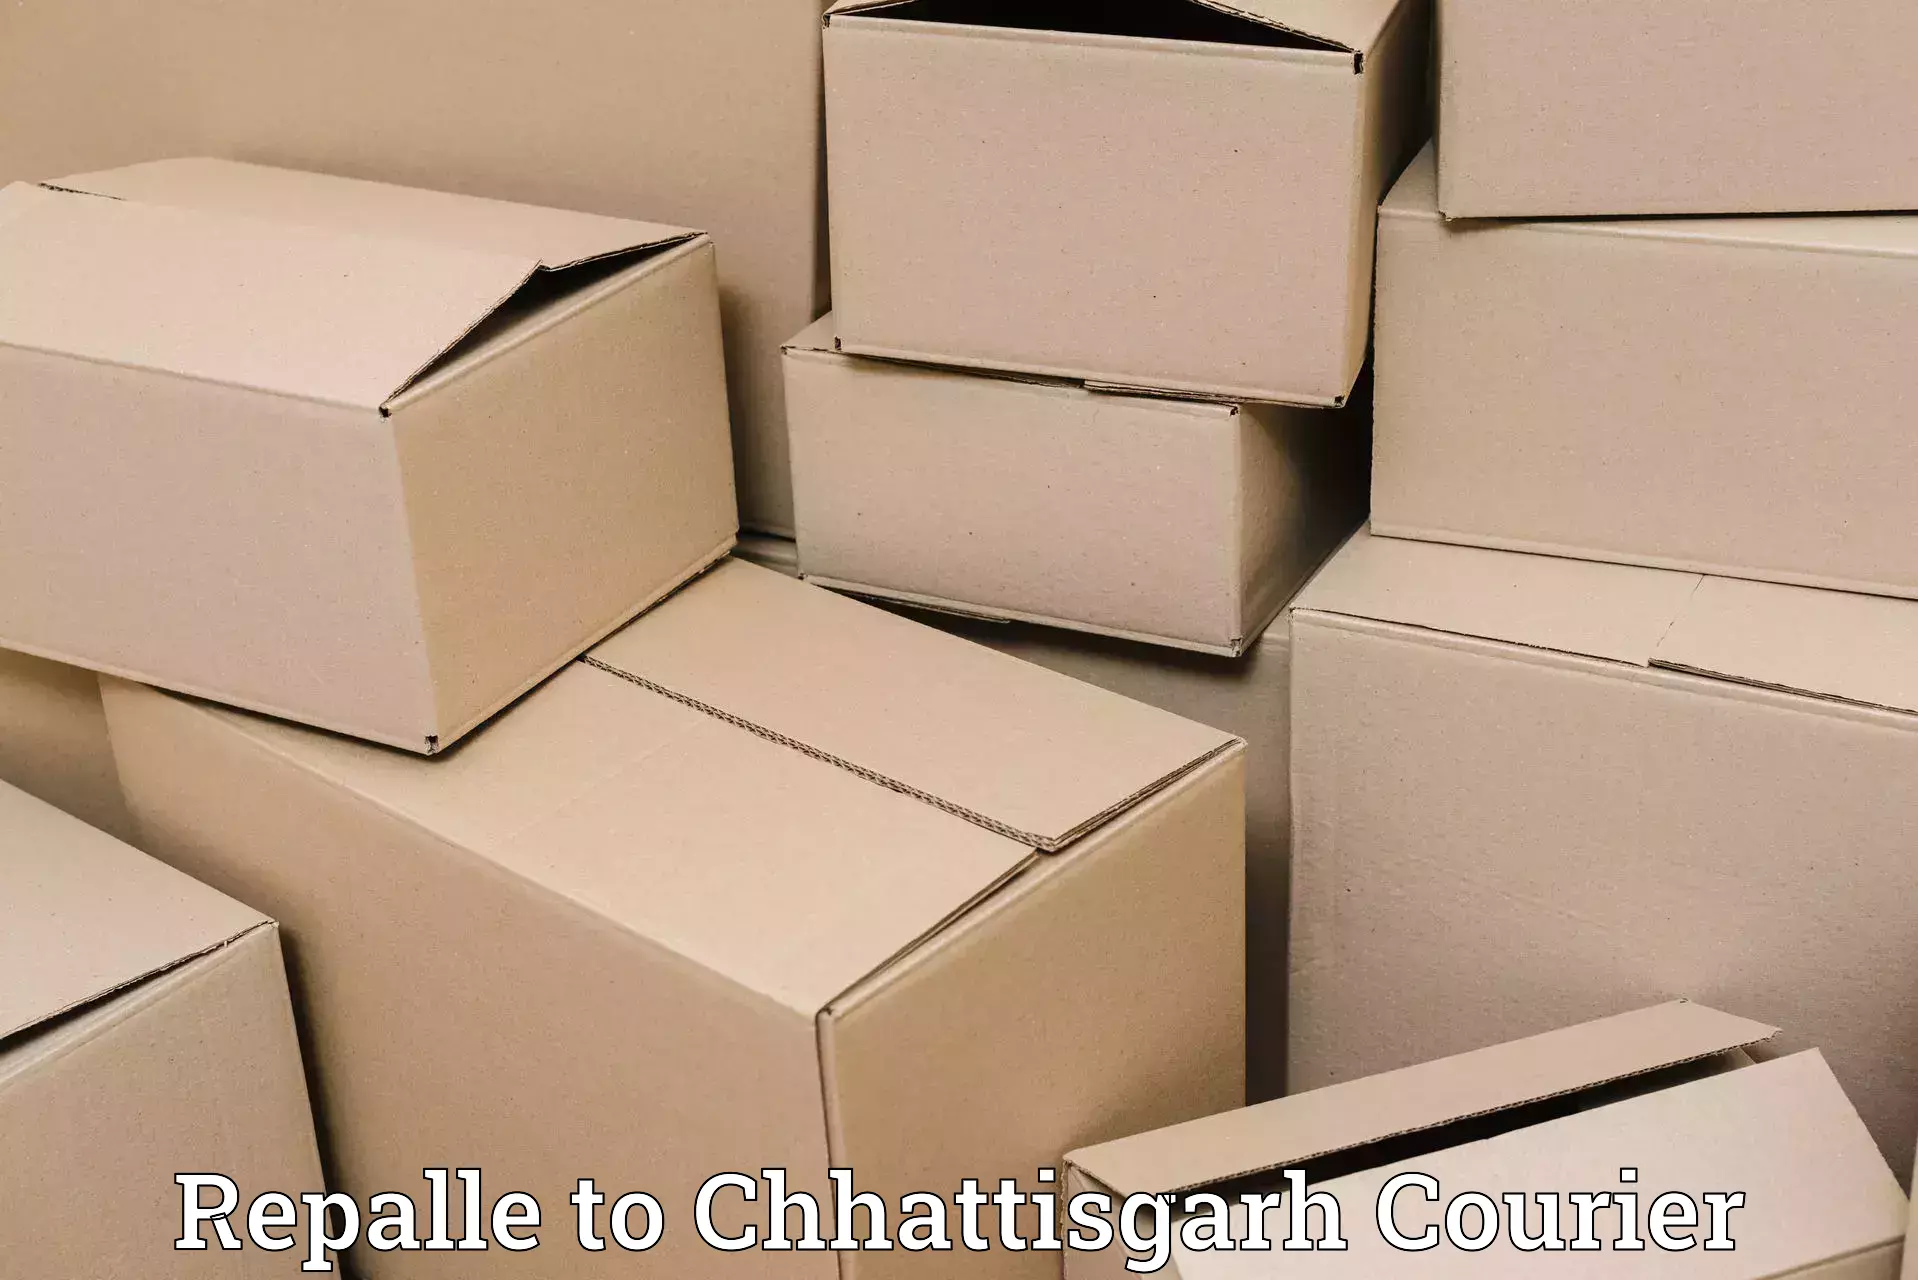 Global baggage shipping Repalle to Chhattisgarh